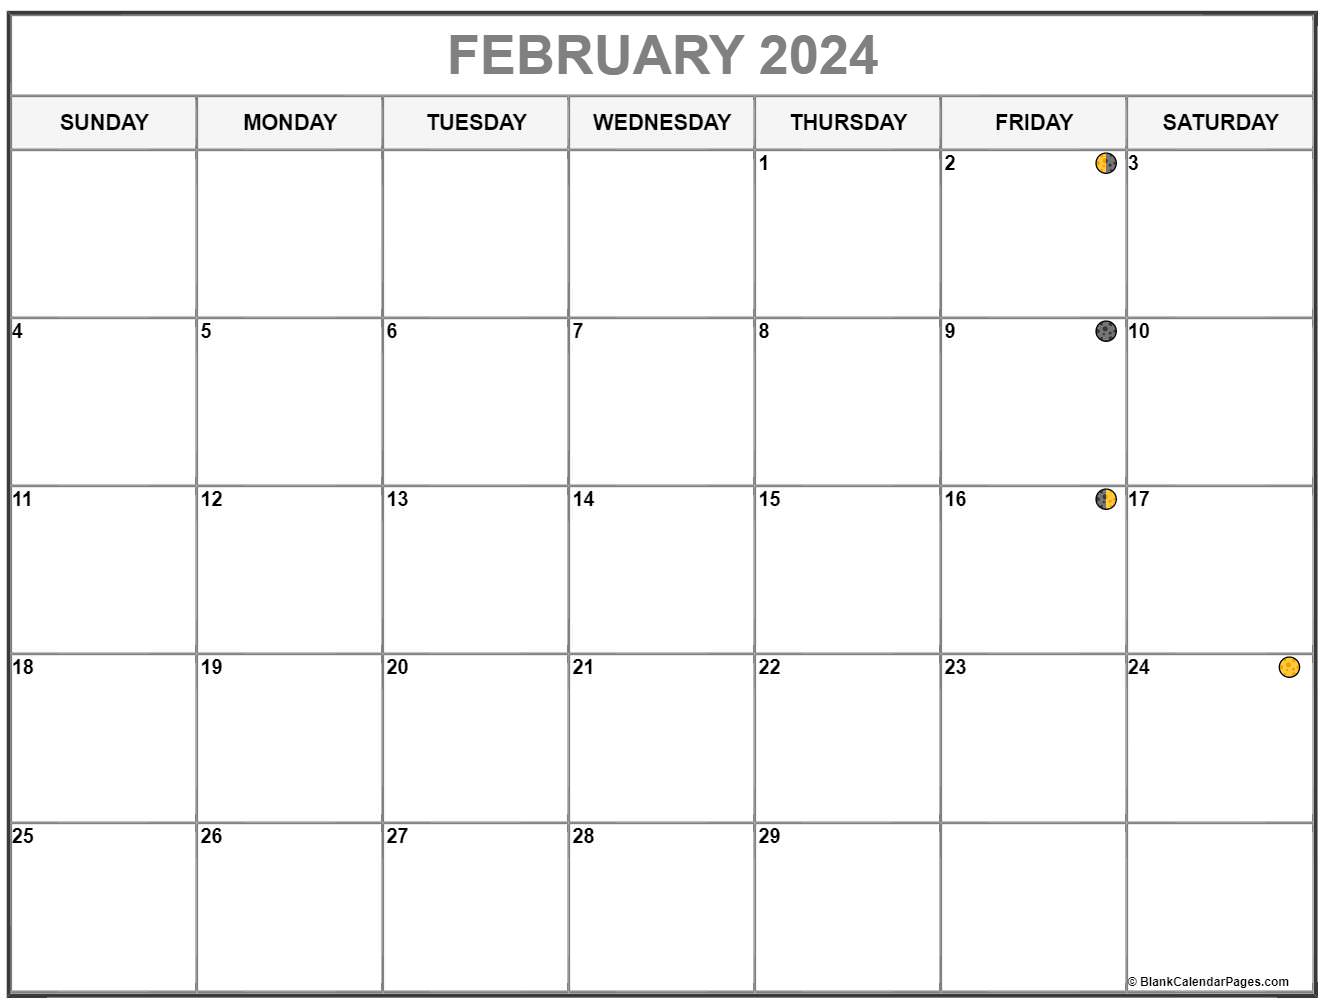 February 2022 Lunar Calendar Moon Phase Calendar